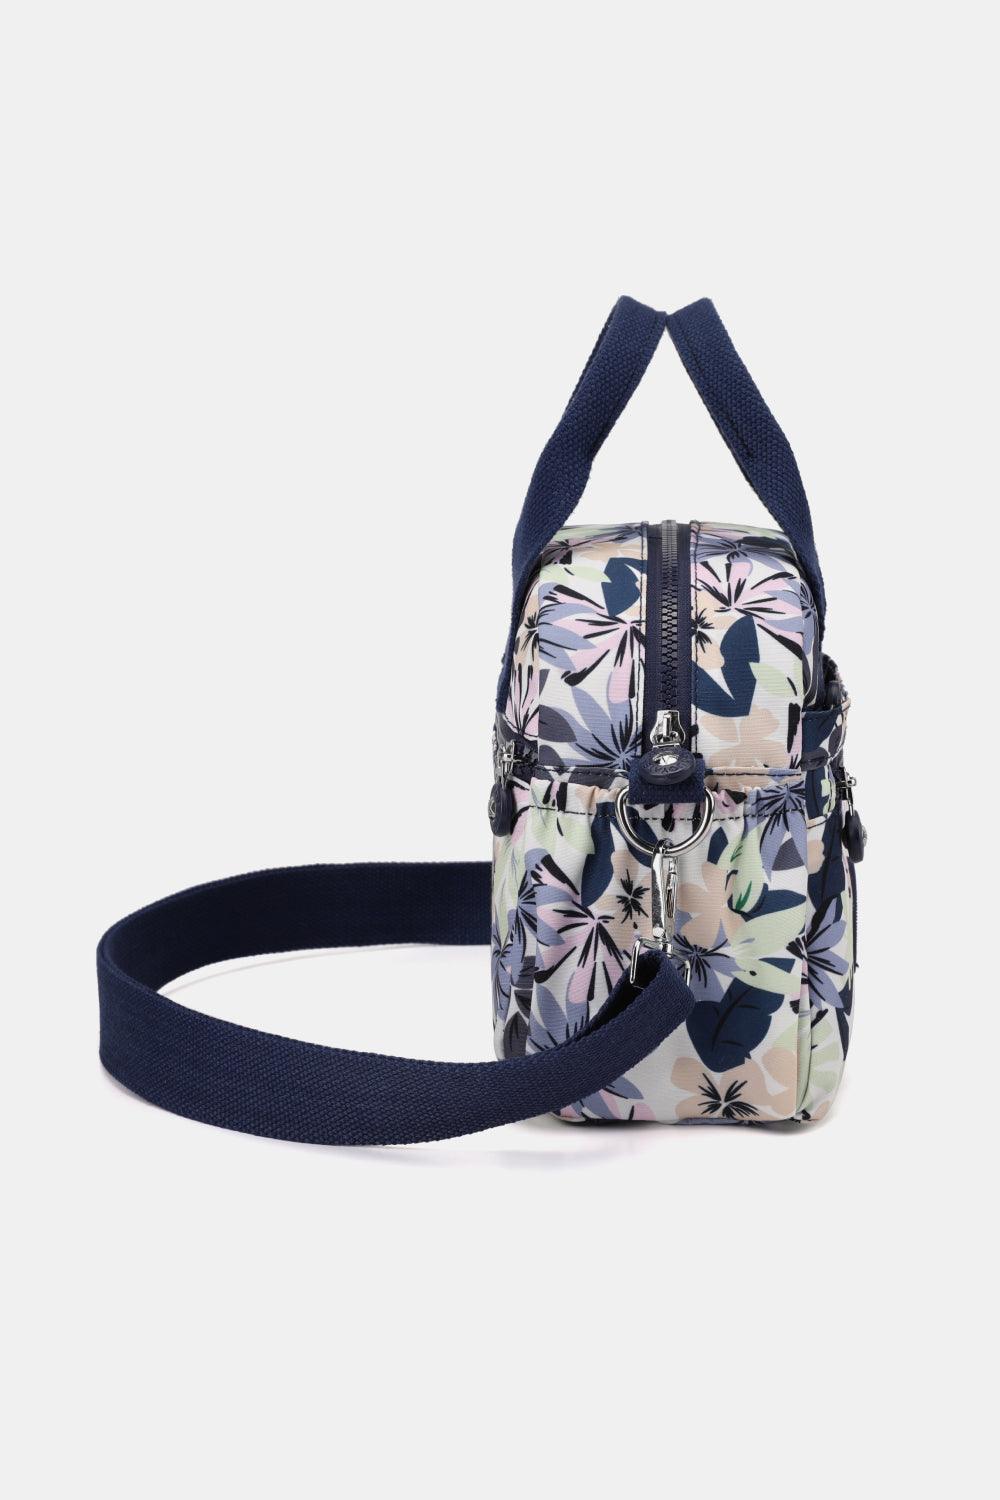 Floral Nylon Handbag - Crazy Like a Daisy Boutique #